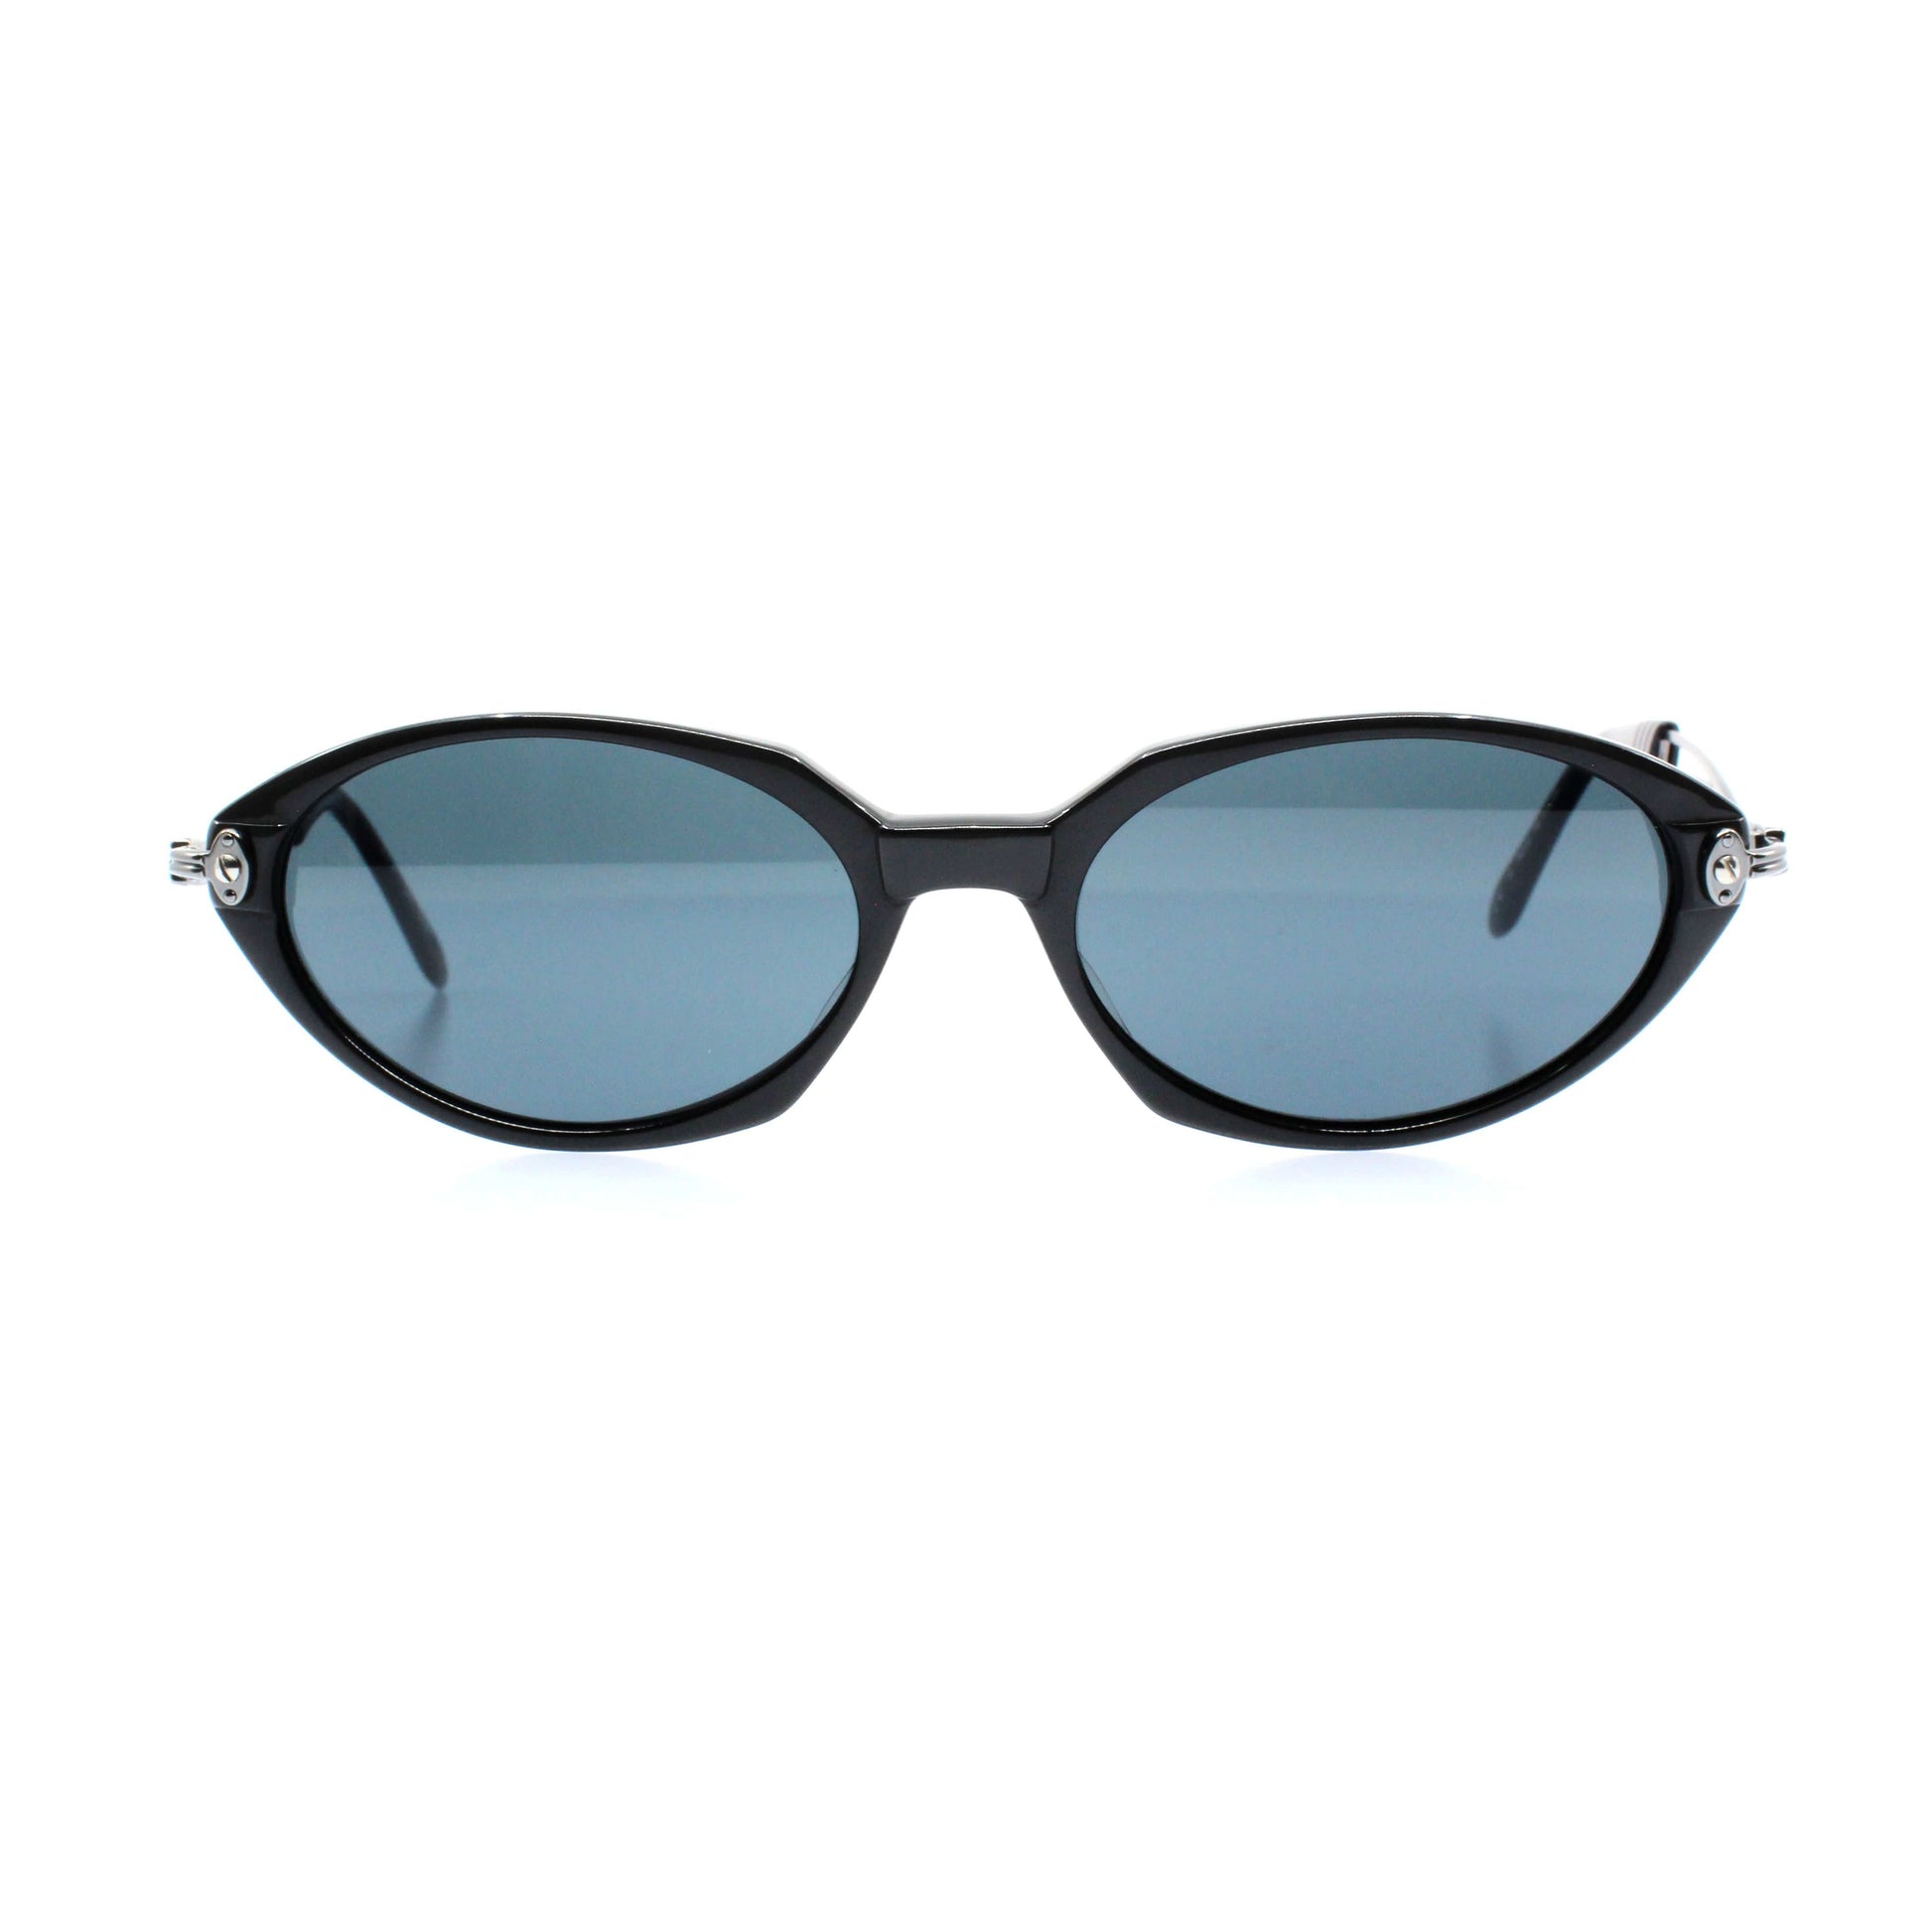 Black Vintage Jean Paul Gaultier 58-7201 Sunglasses RSTKD Vintage